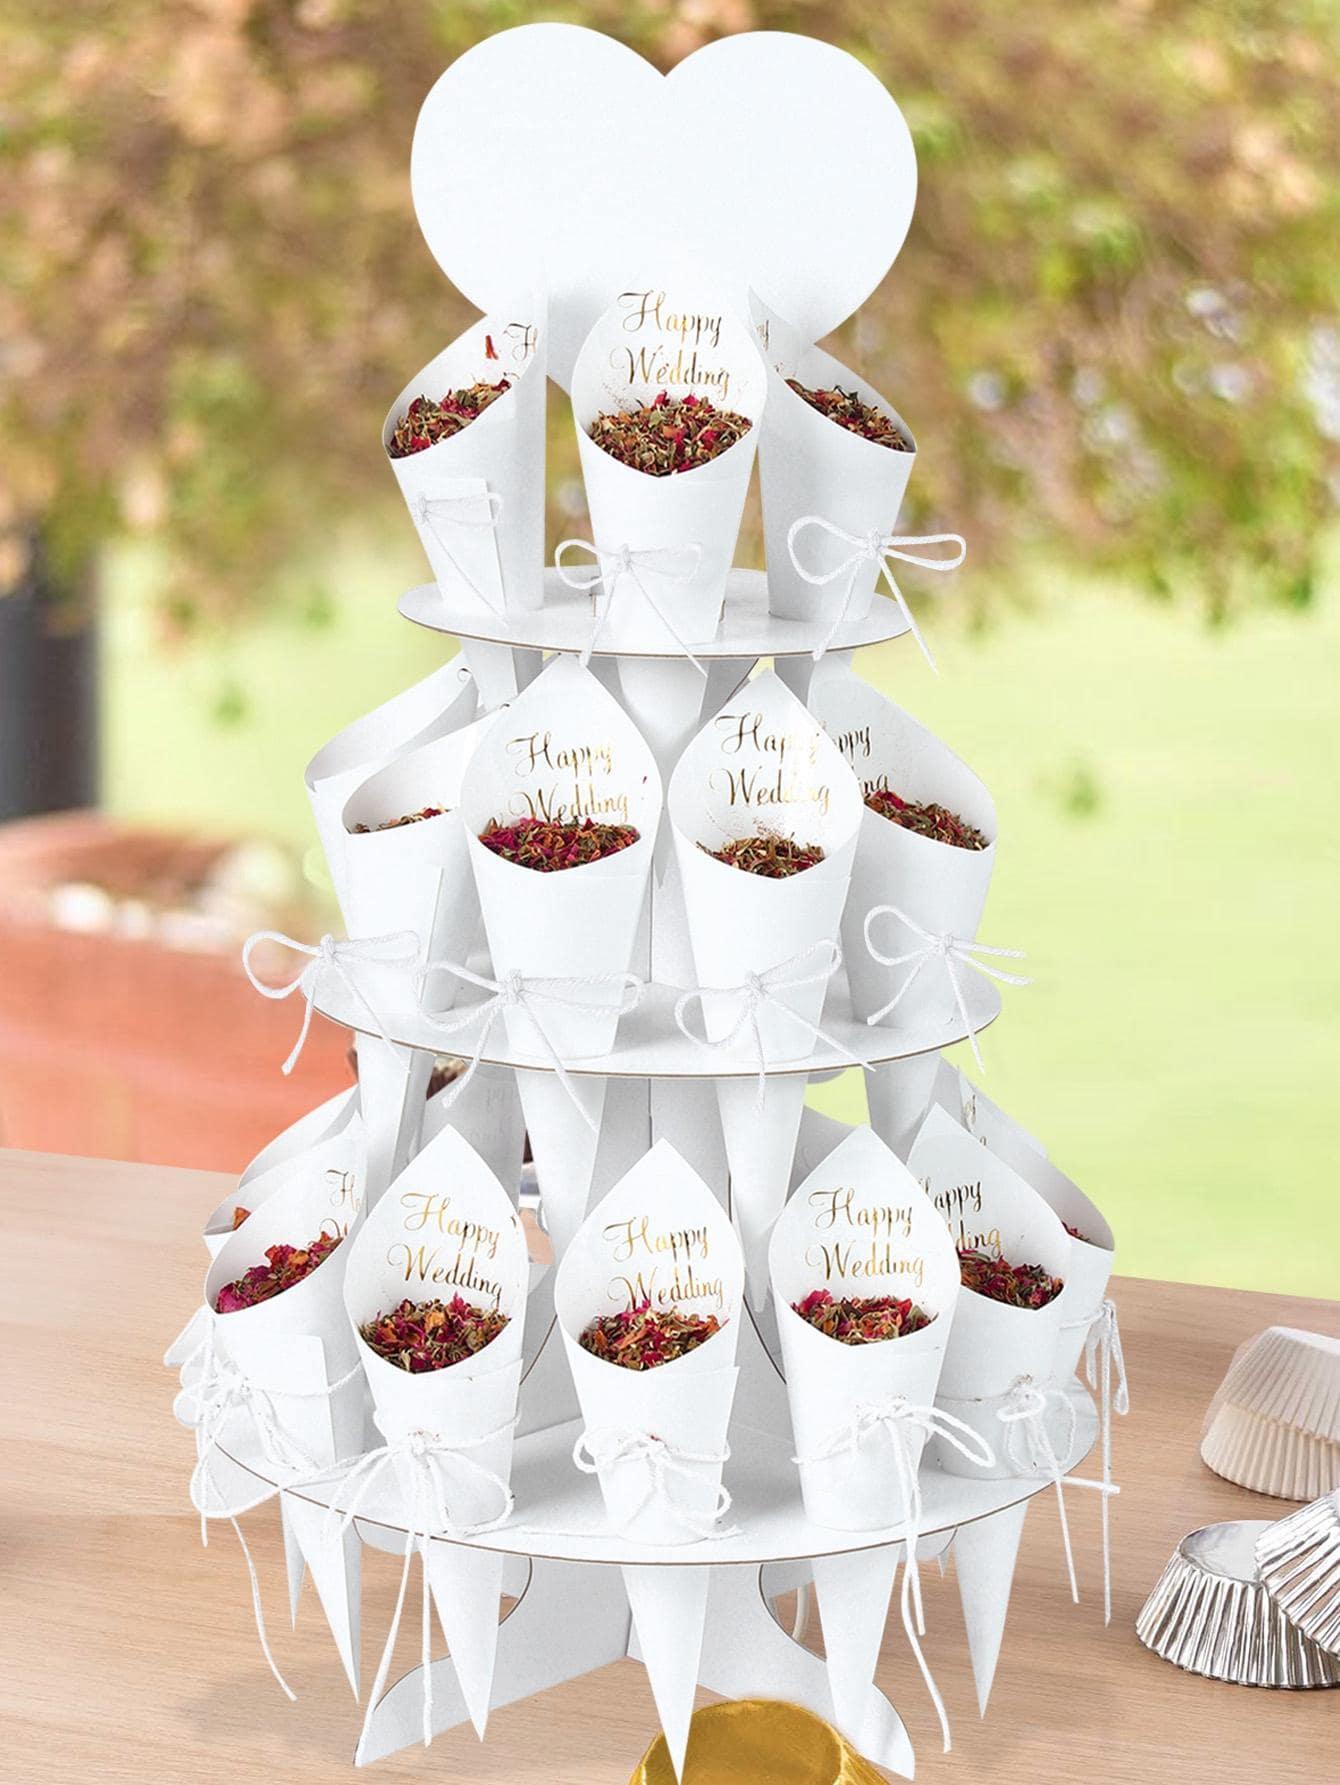 57pcs Flower Paper Cone Holder Set, Modern Paper Cone Holder Set For Wedding Send off - If you say i do